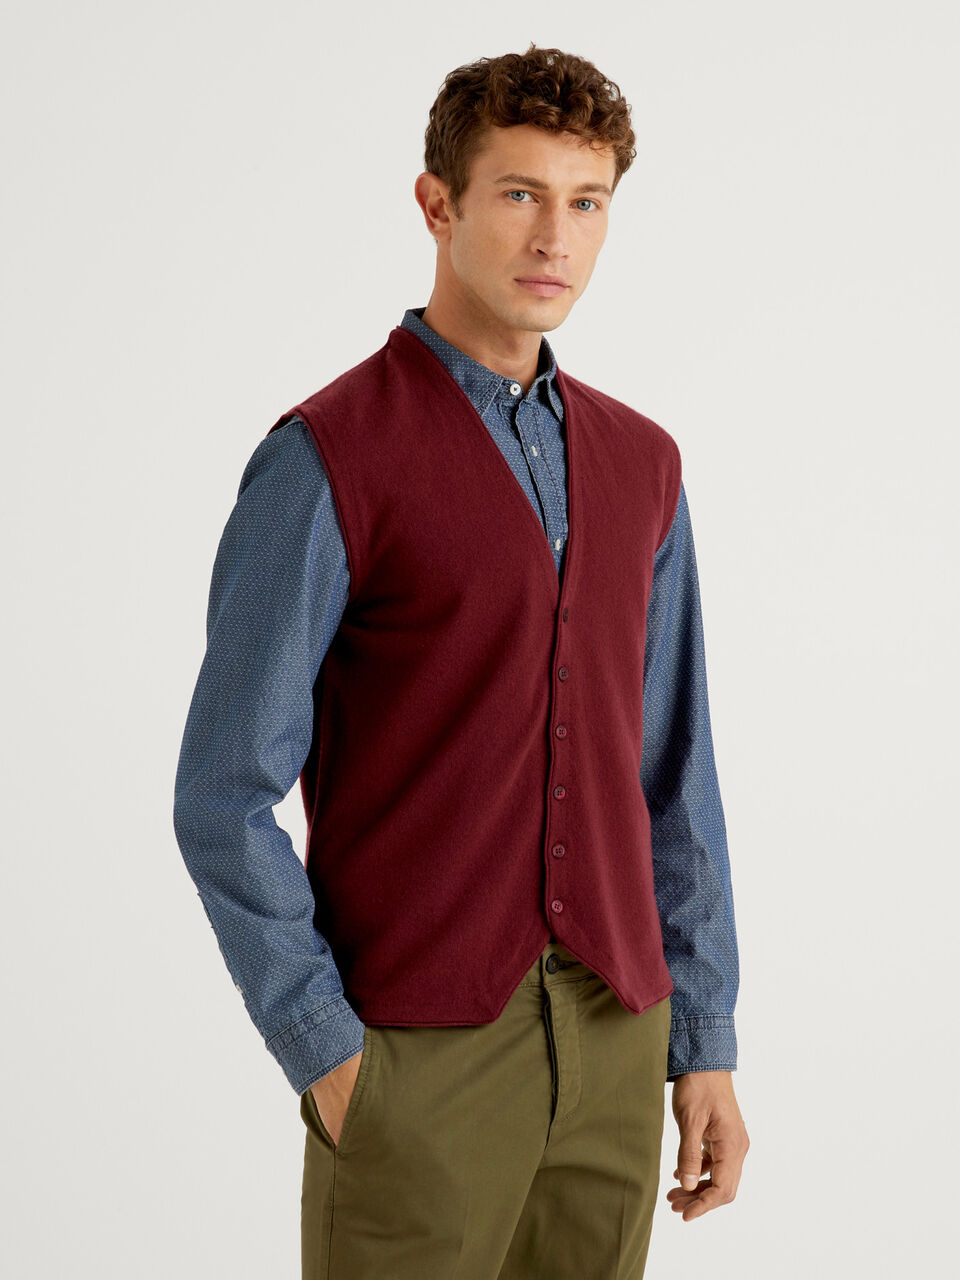 Men's Merino Wool Vest 100% Pure Merino Wool V Neck Sweater Vest